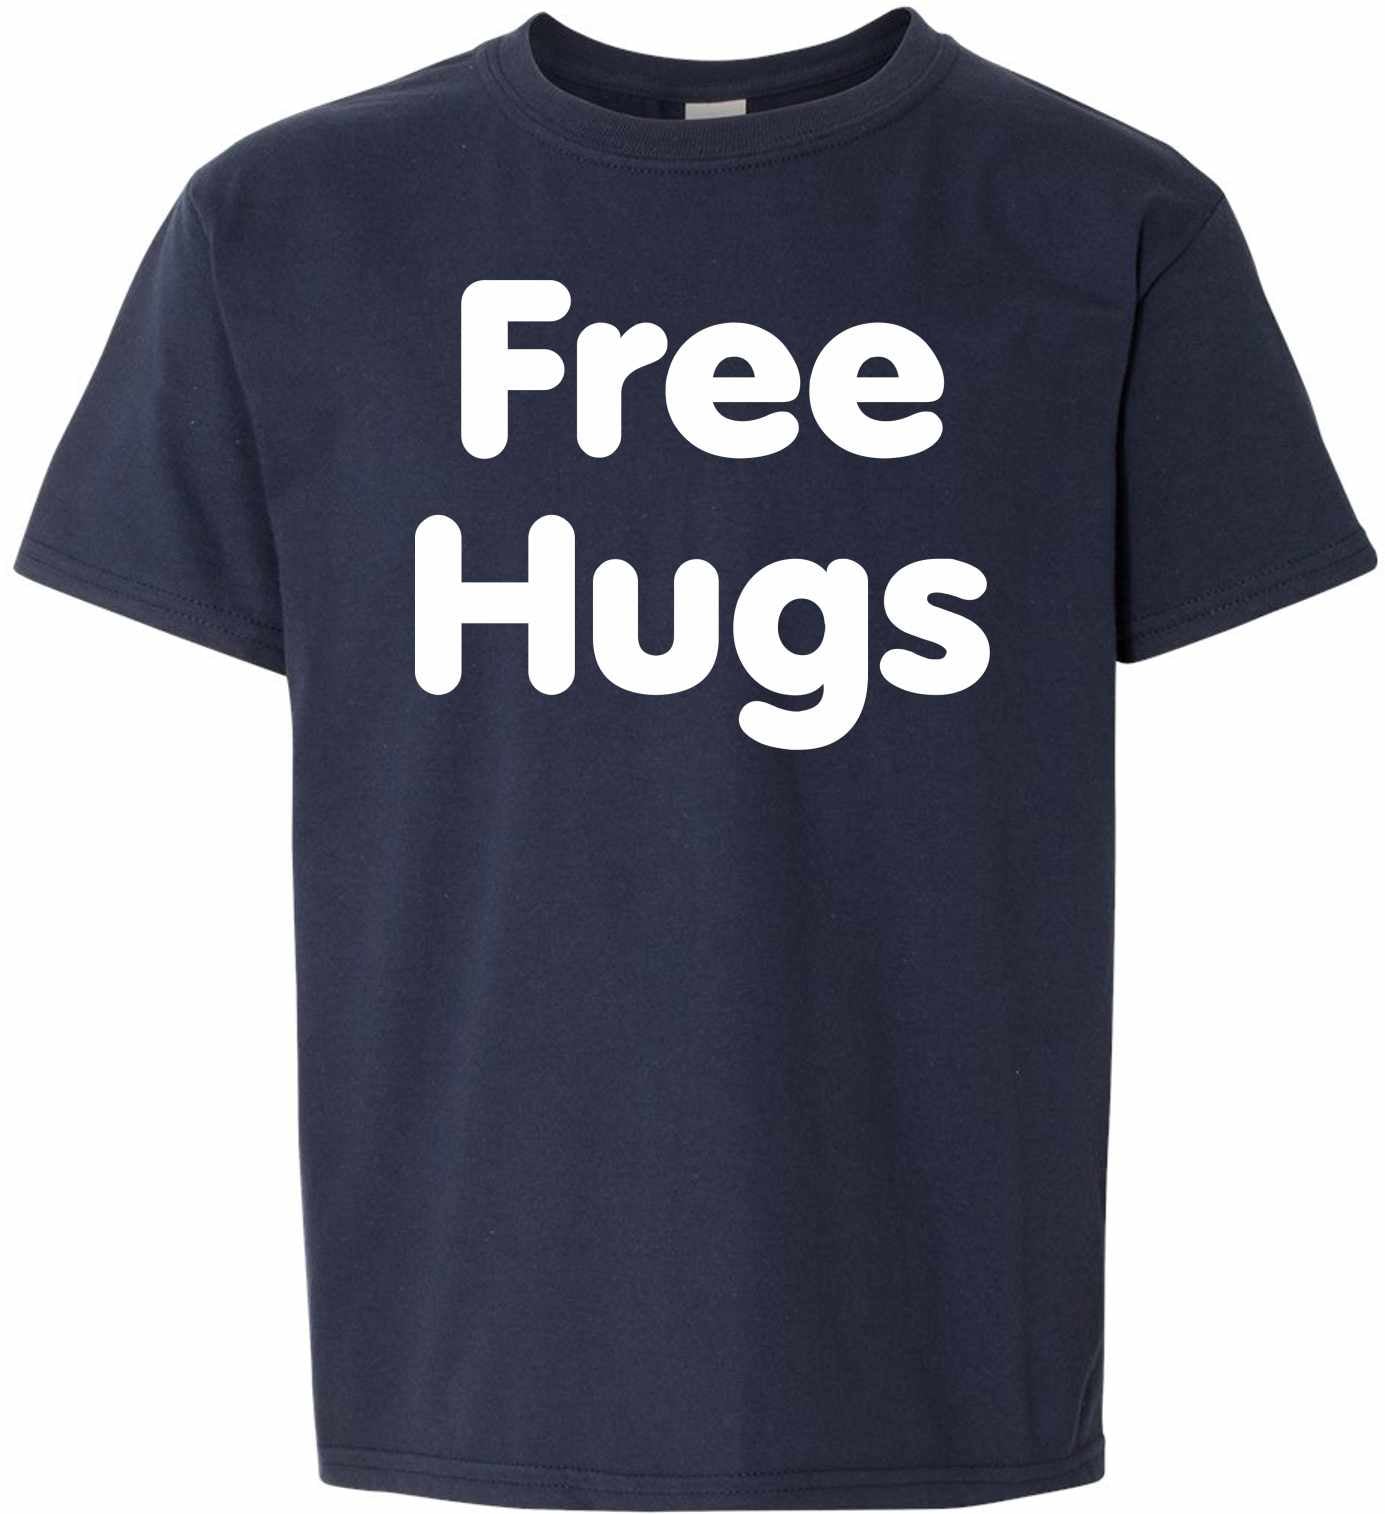 FREE HUGS on Kids T-Shirt (#572-201)